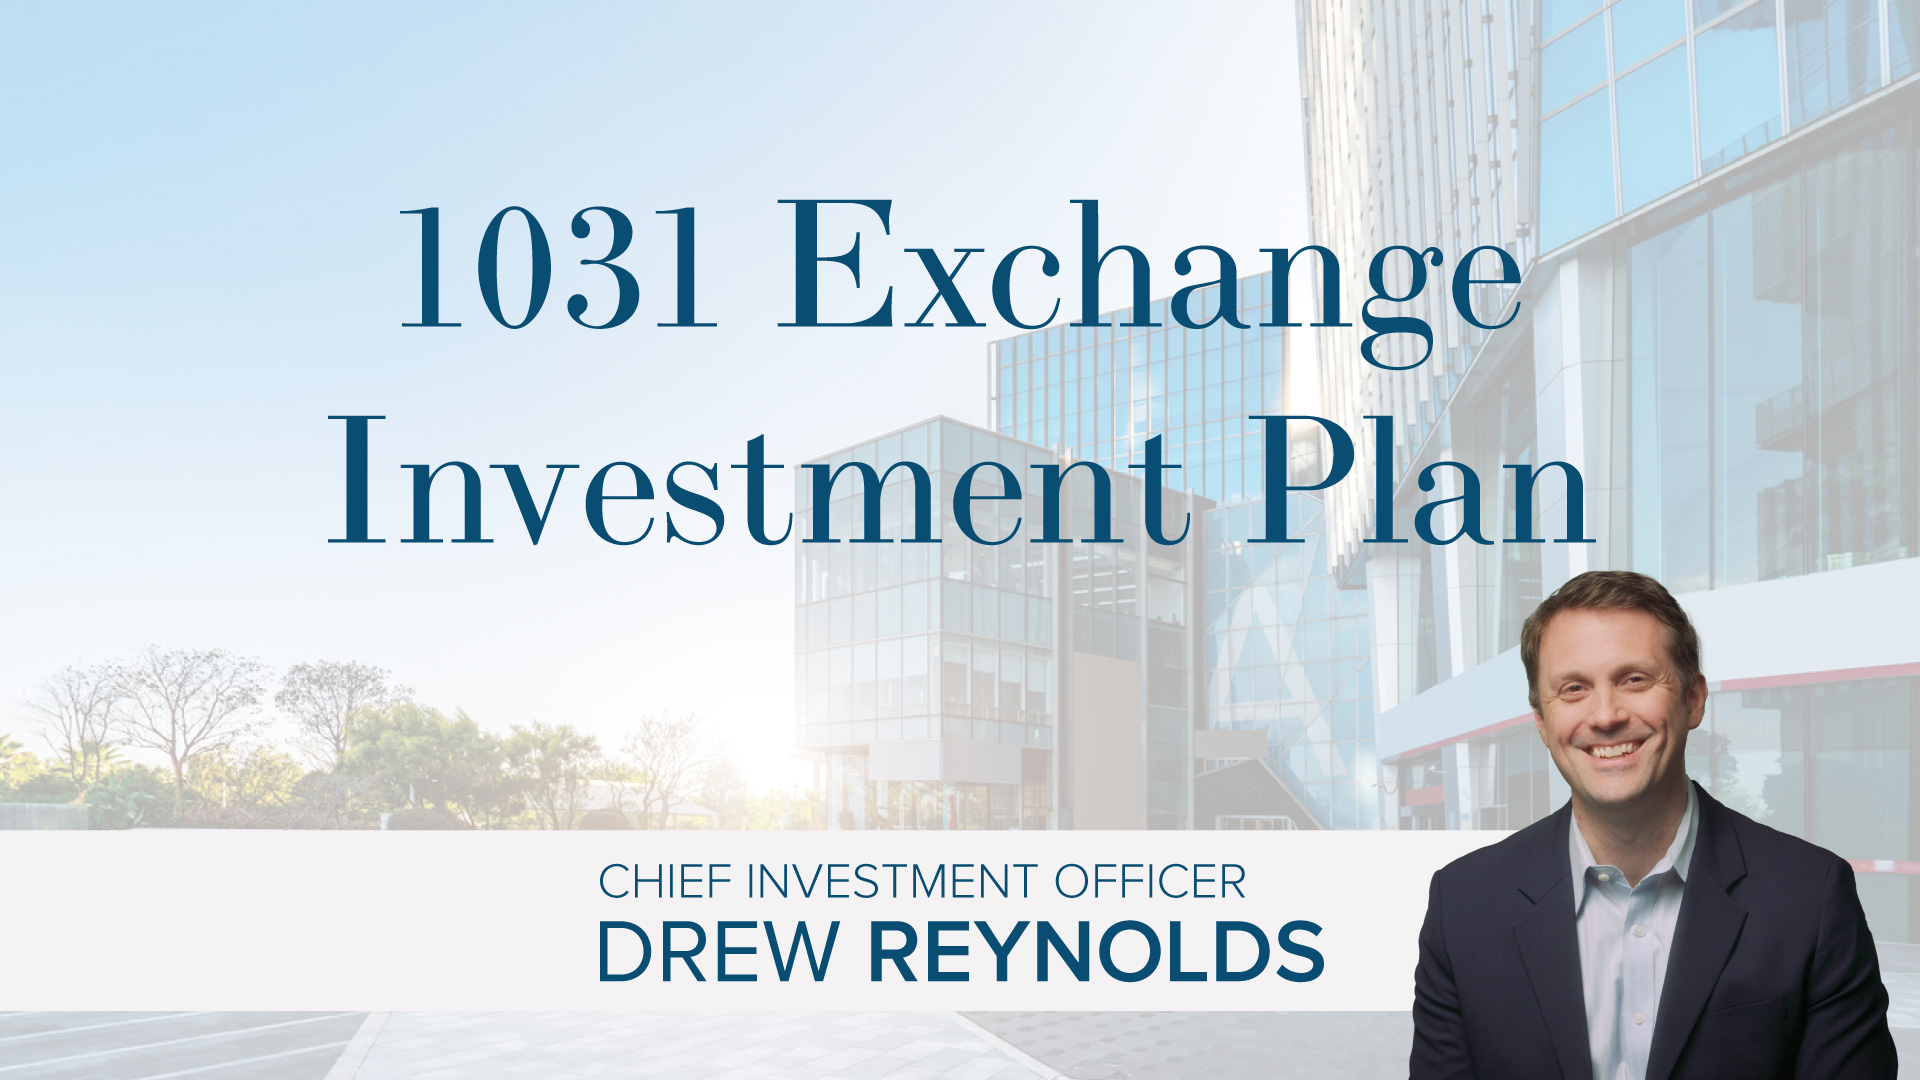 1031 Exchange Investment Plan [c]